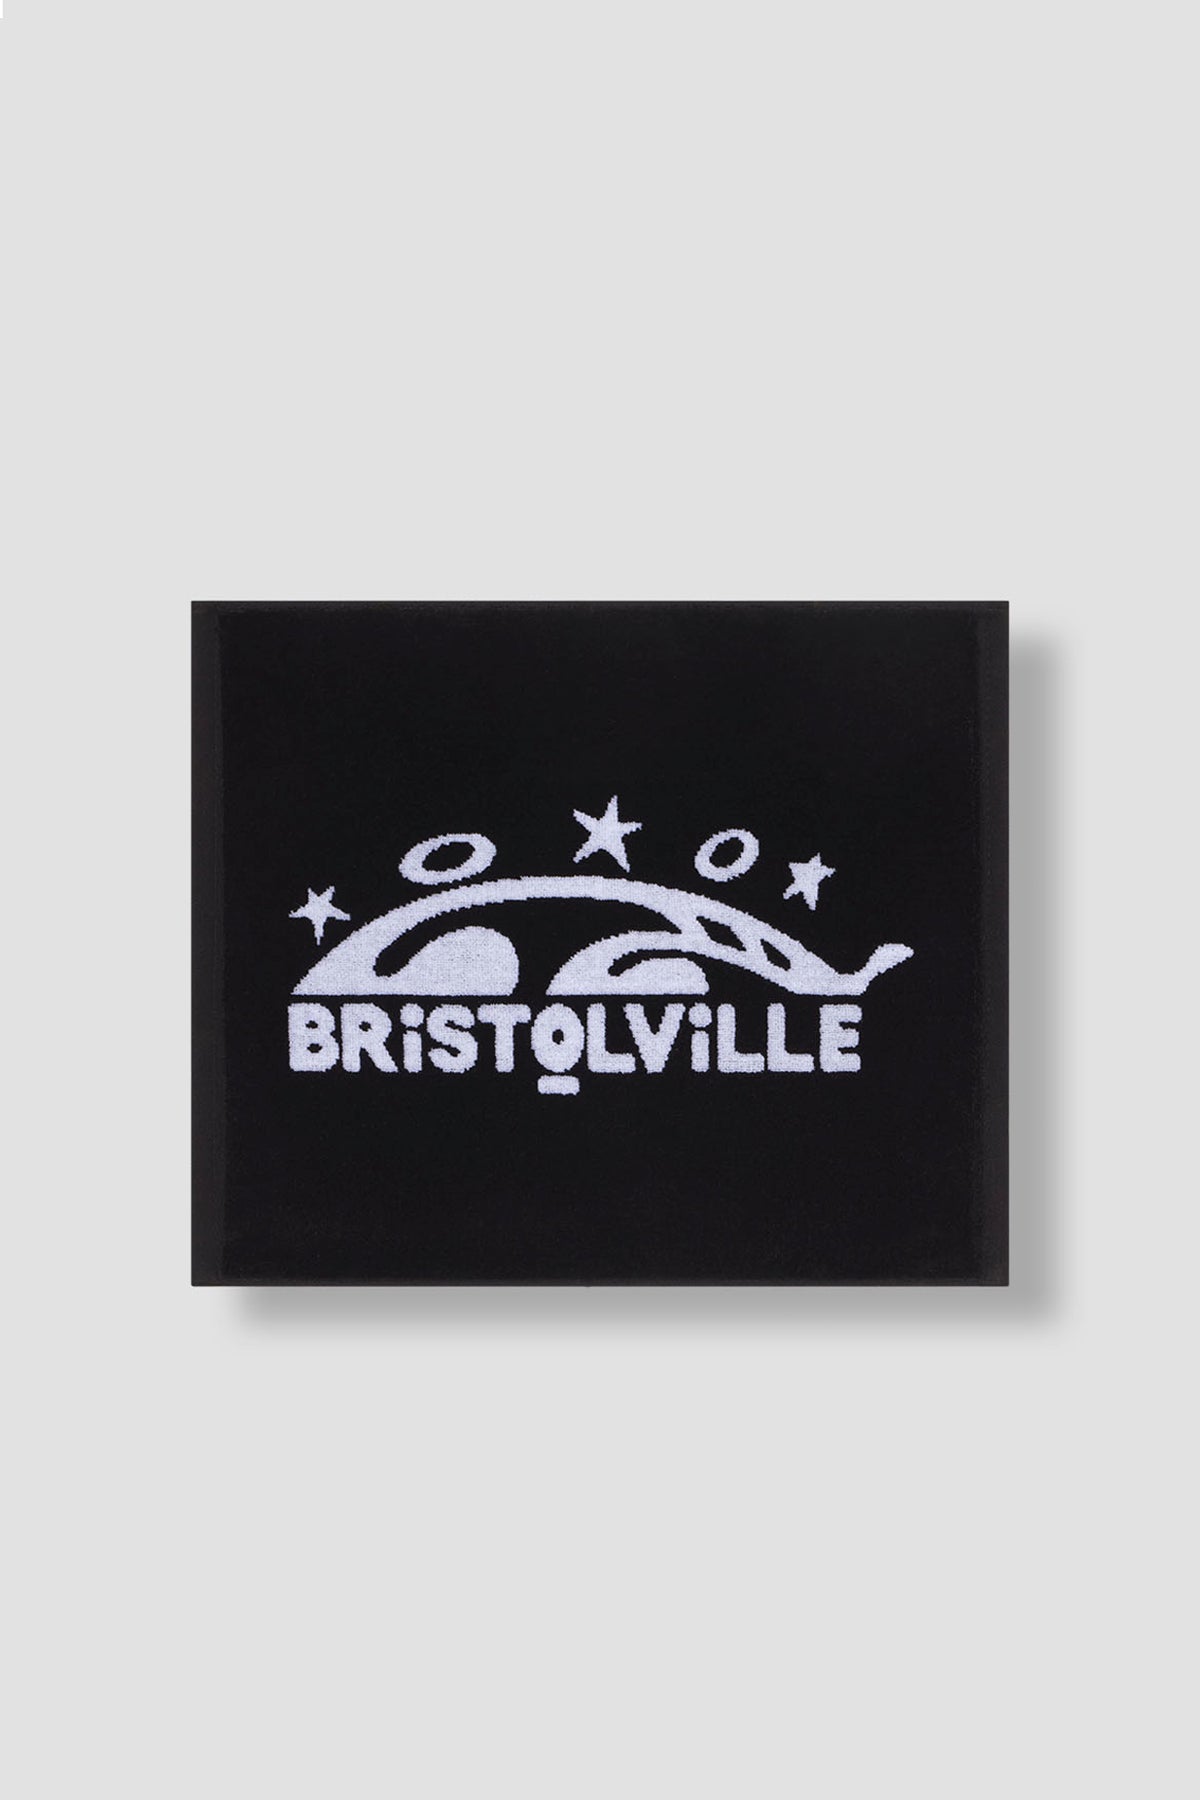 ‘Bristolville' Sideline Towel